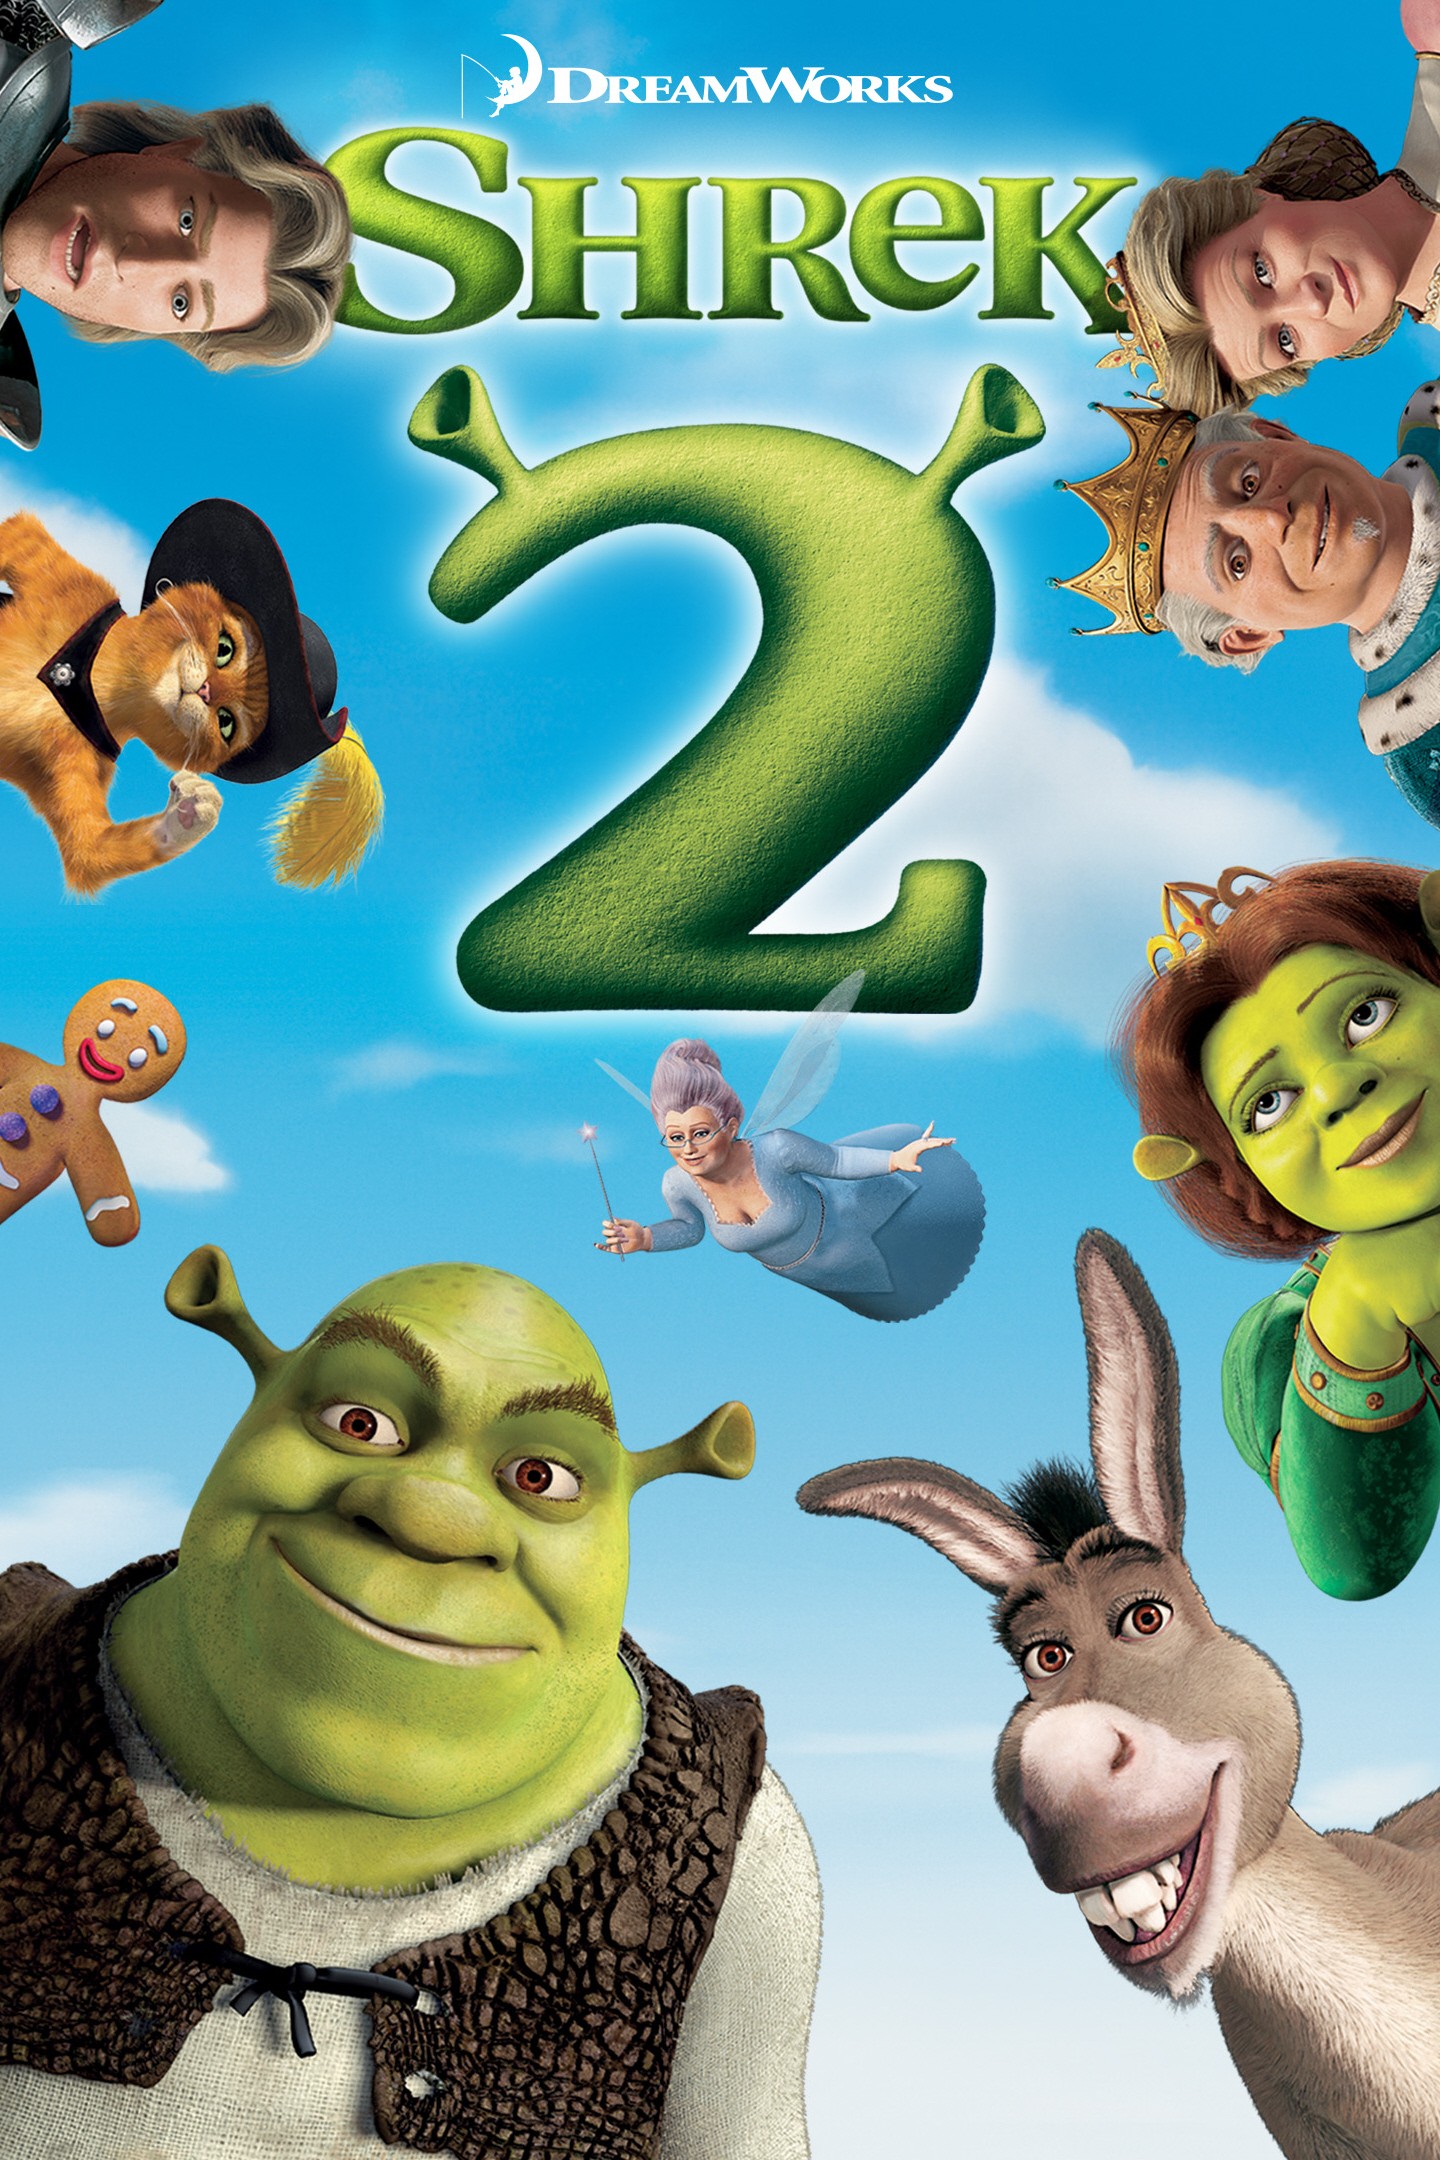 Sherk and Donkey, Donkey Shrek Film Series Princess Fiona Eddie Murphy,  Shrek transparent background PNG clipart